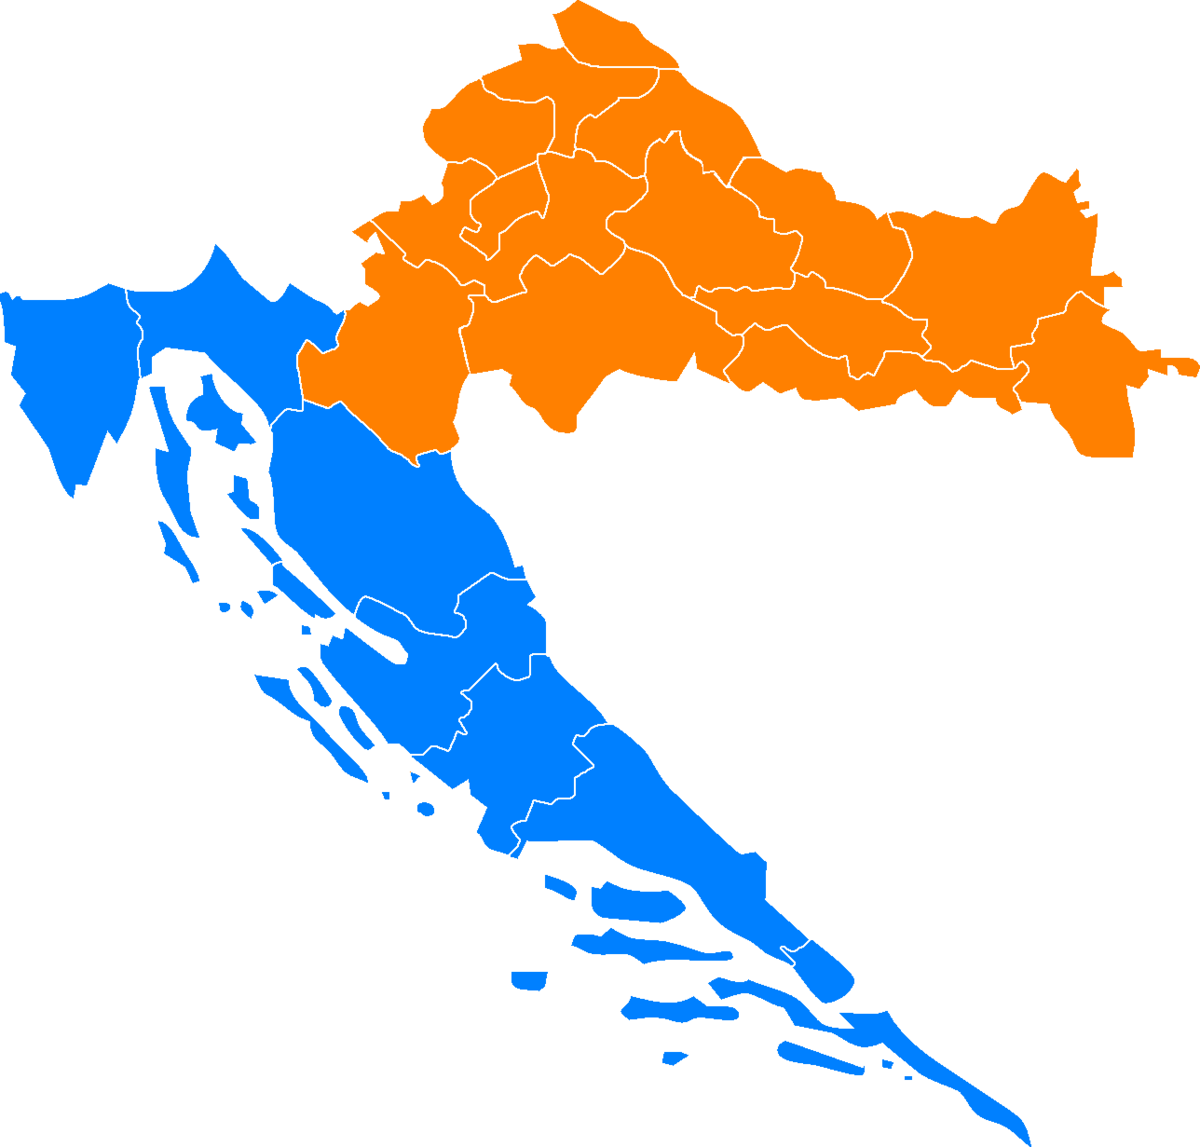 https://upload.wikimedia.org/wikipedia/commons/thumb/6/6d/NUTS_of_Croatia_%282013%29.png/1200px-NUTS_of_Croatia_%282013%29.png